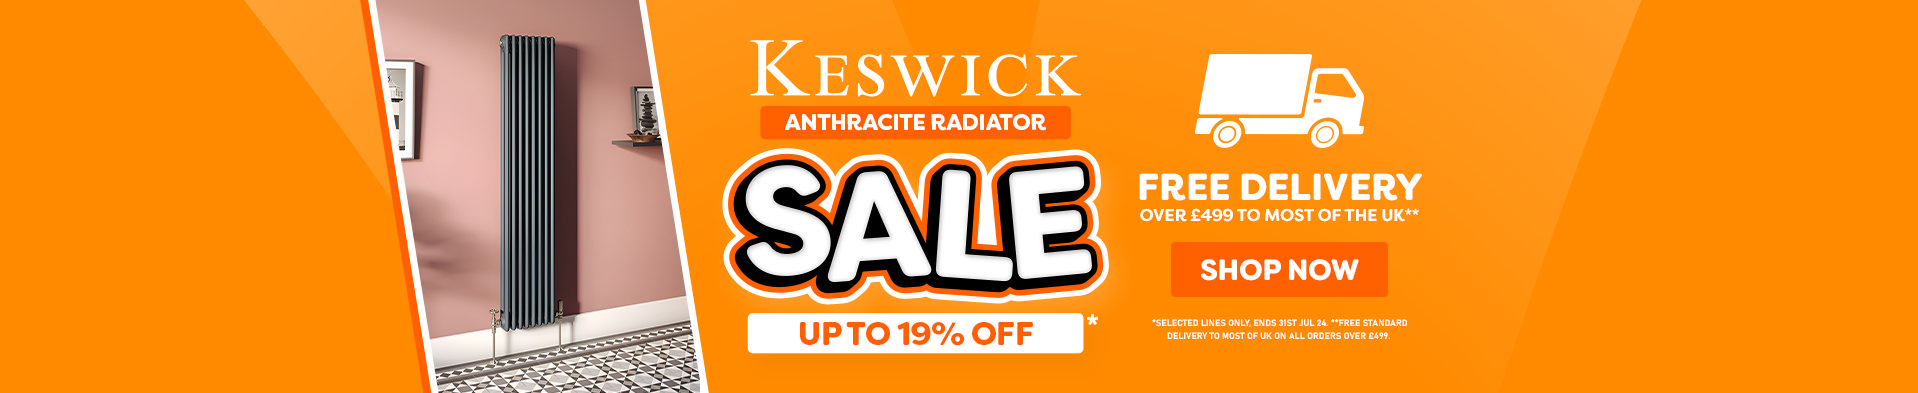 Keswick Anthracite Rad Sale - Free Delivery